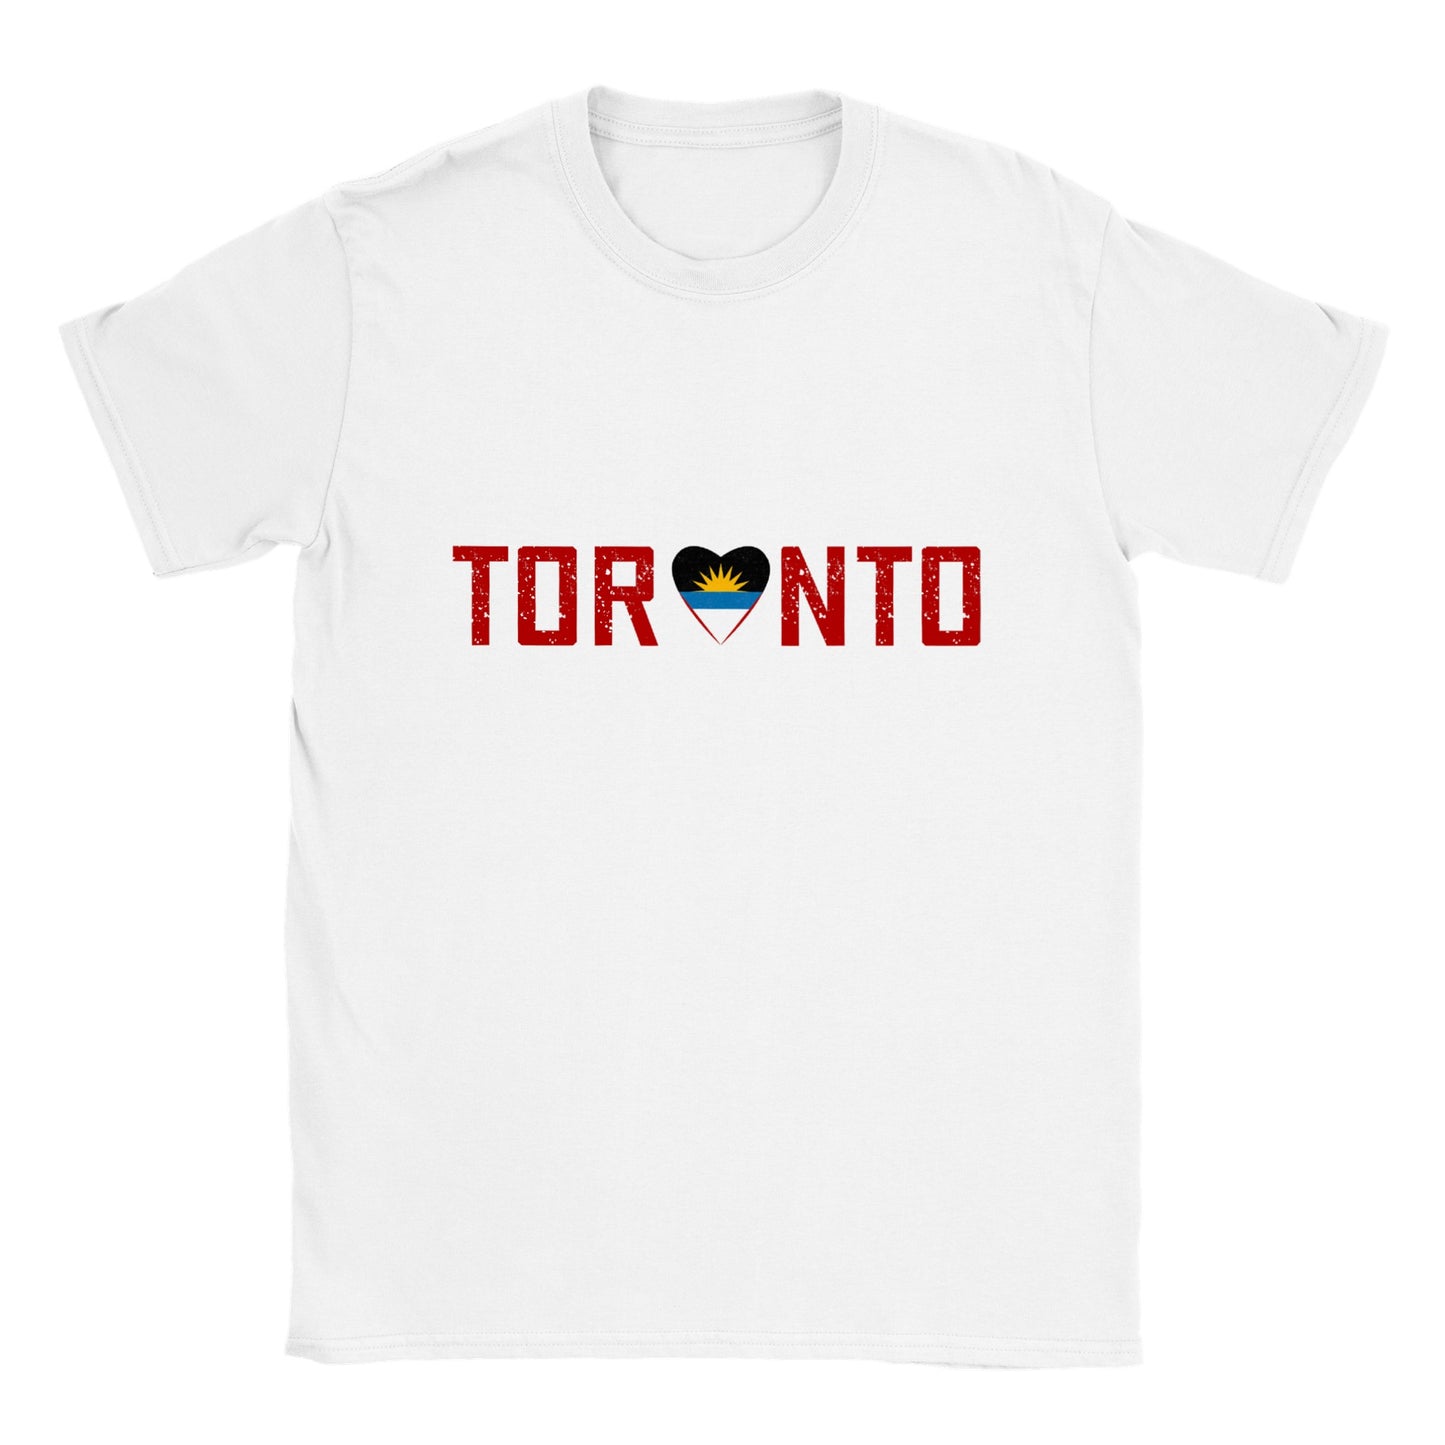 Toronto at Heart - Antigua & Barbuda - Classic Unisex Crewneck T-shirt